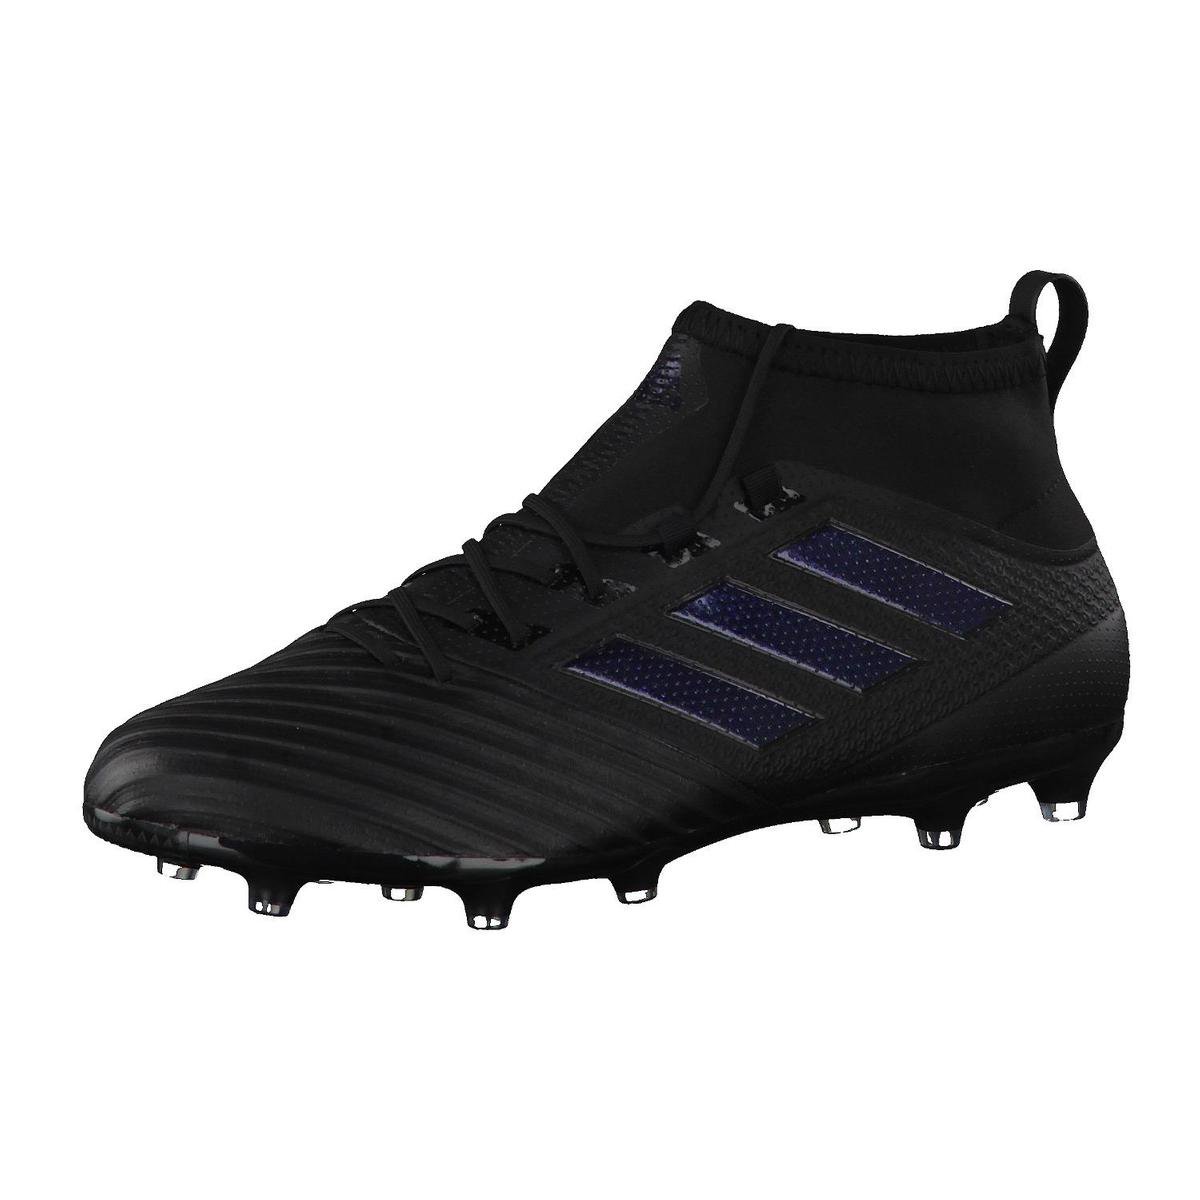 adidas - ACE 17.2 FG - Blackout - Chaussures de foot - Taille 40 2/3 |  bol.com